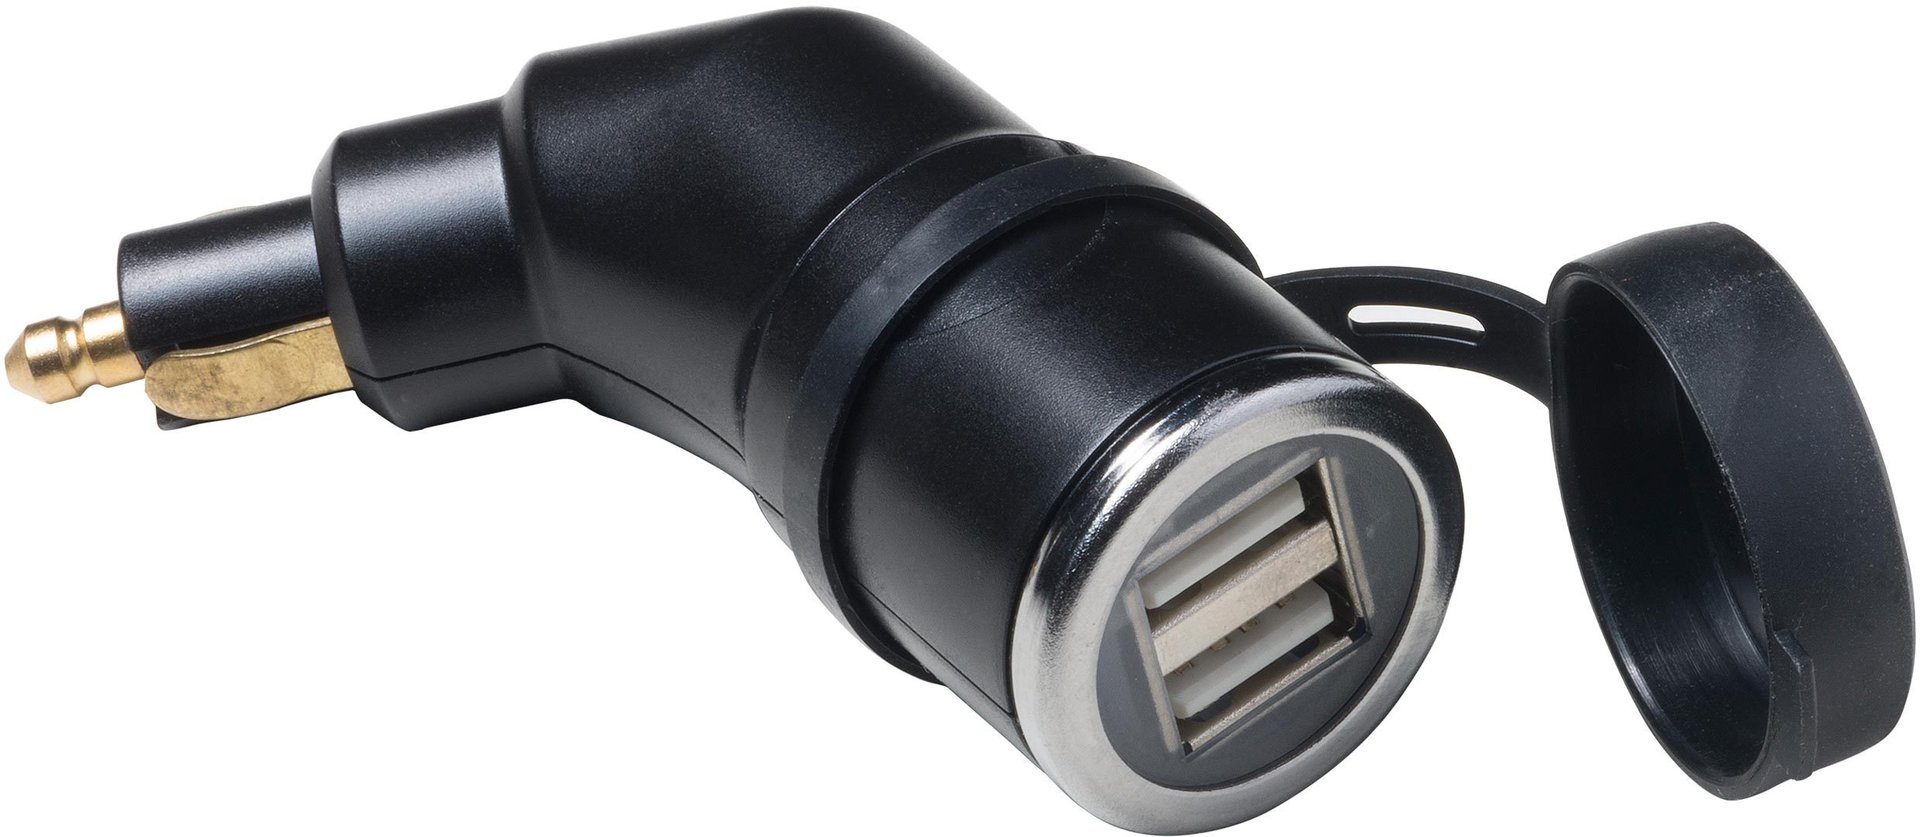 Image of Interphone DIN USB Adaptateur